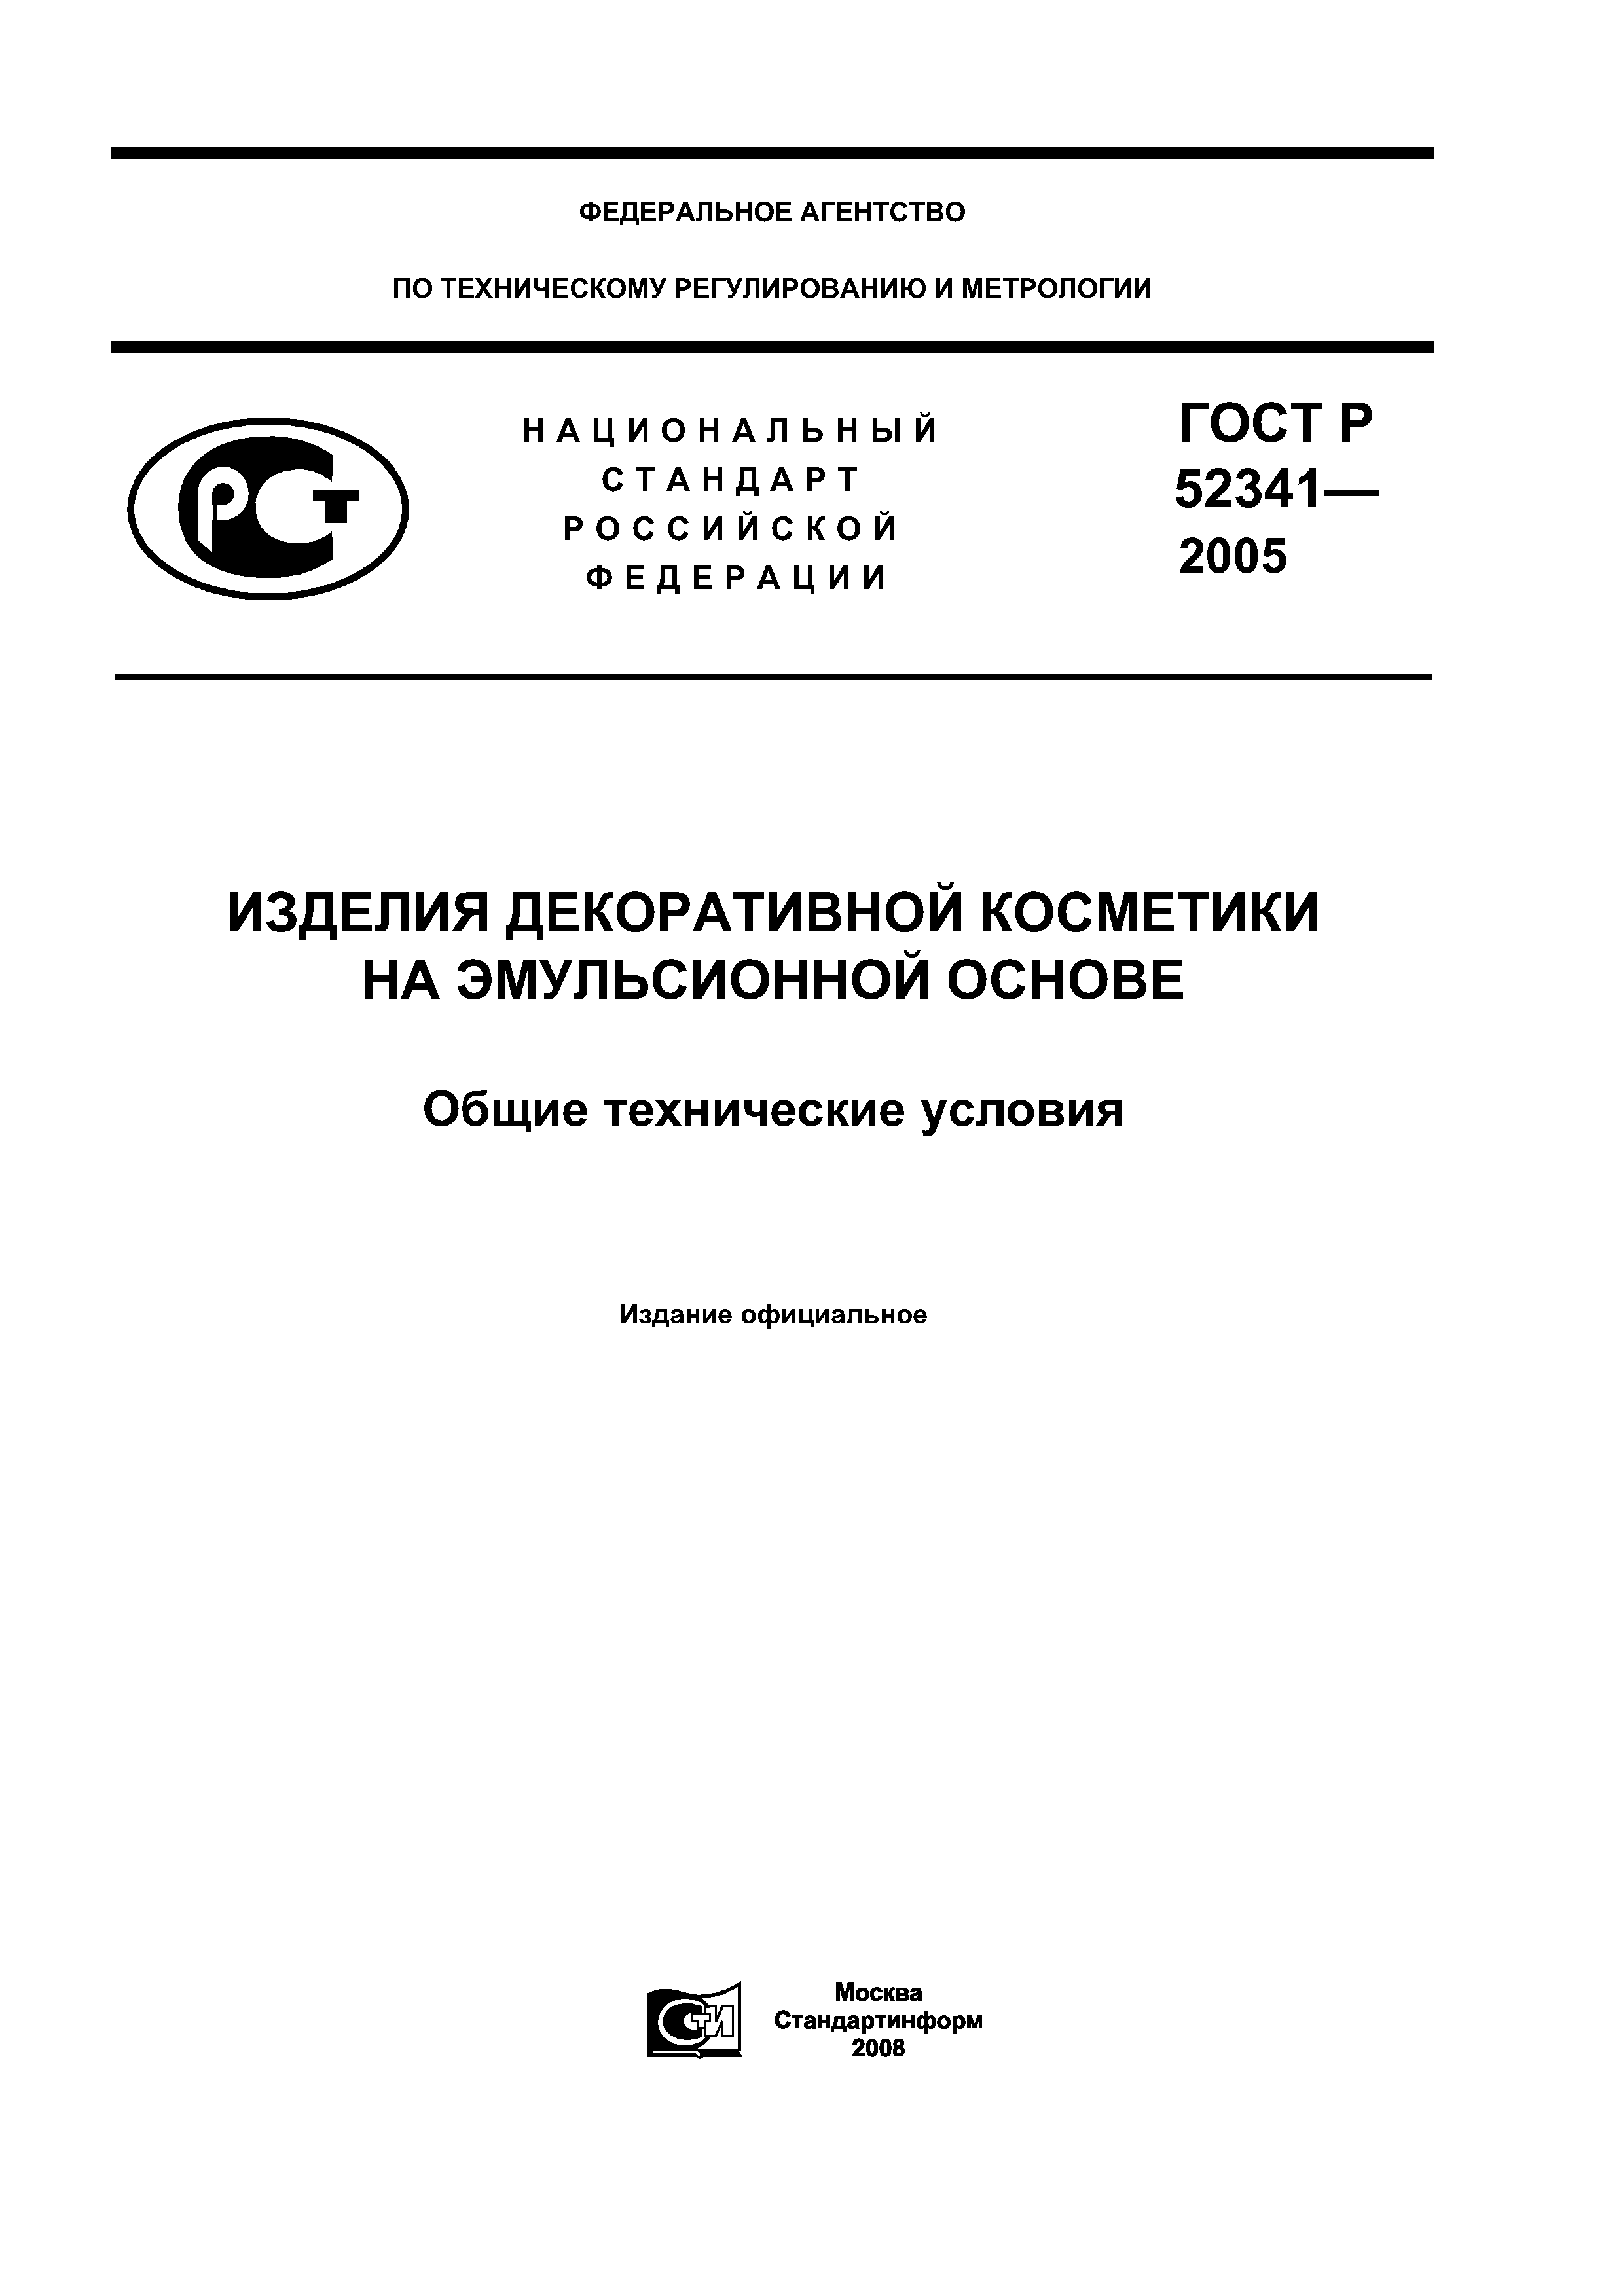 ГОСТ Р 52341-2005